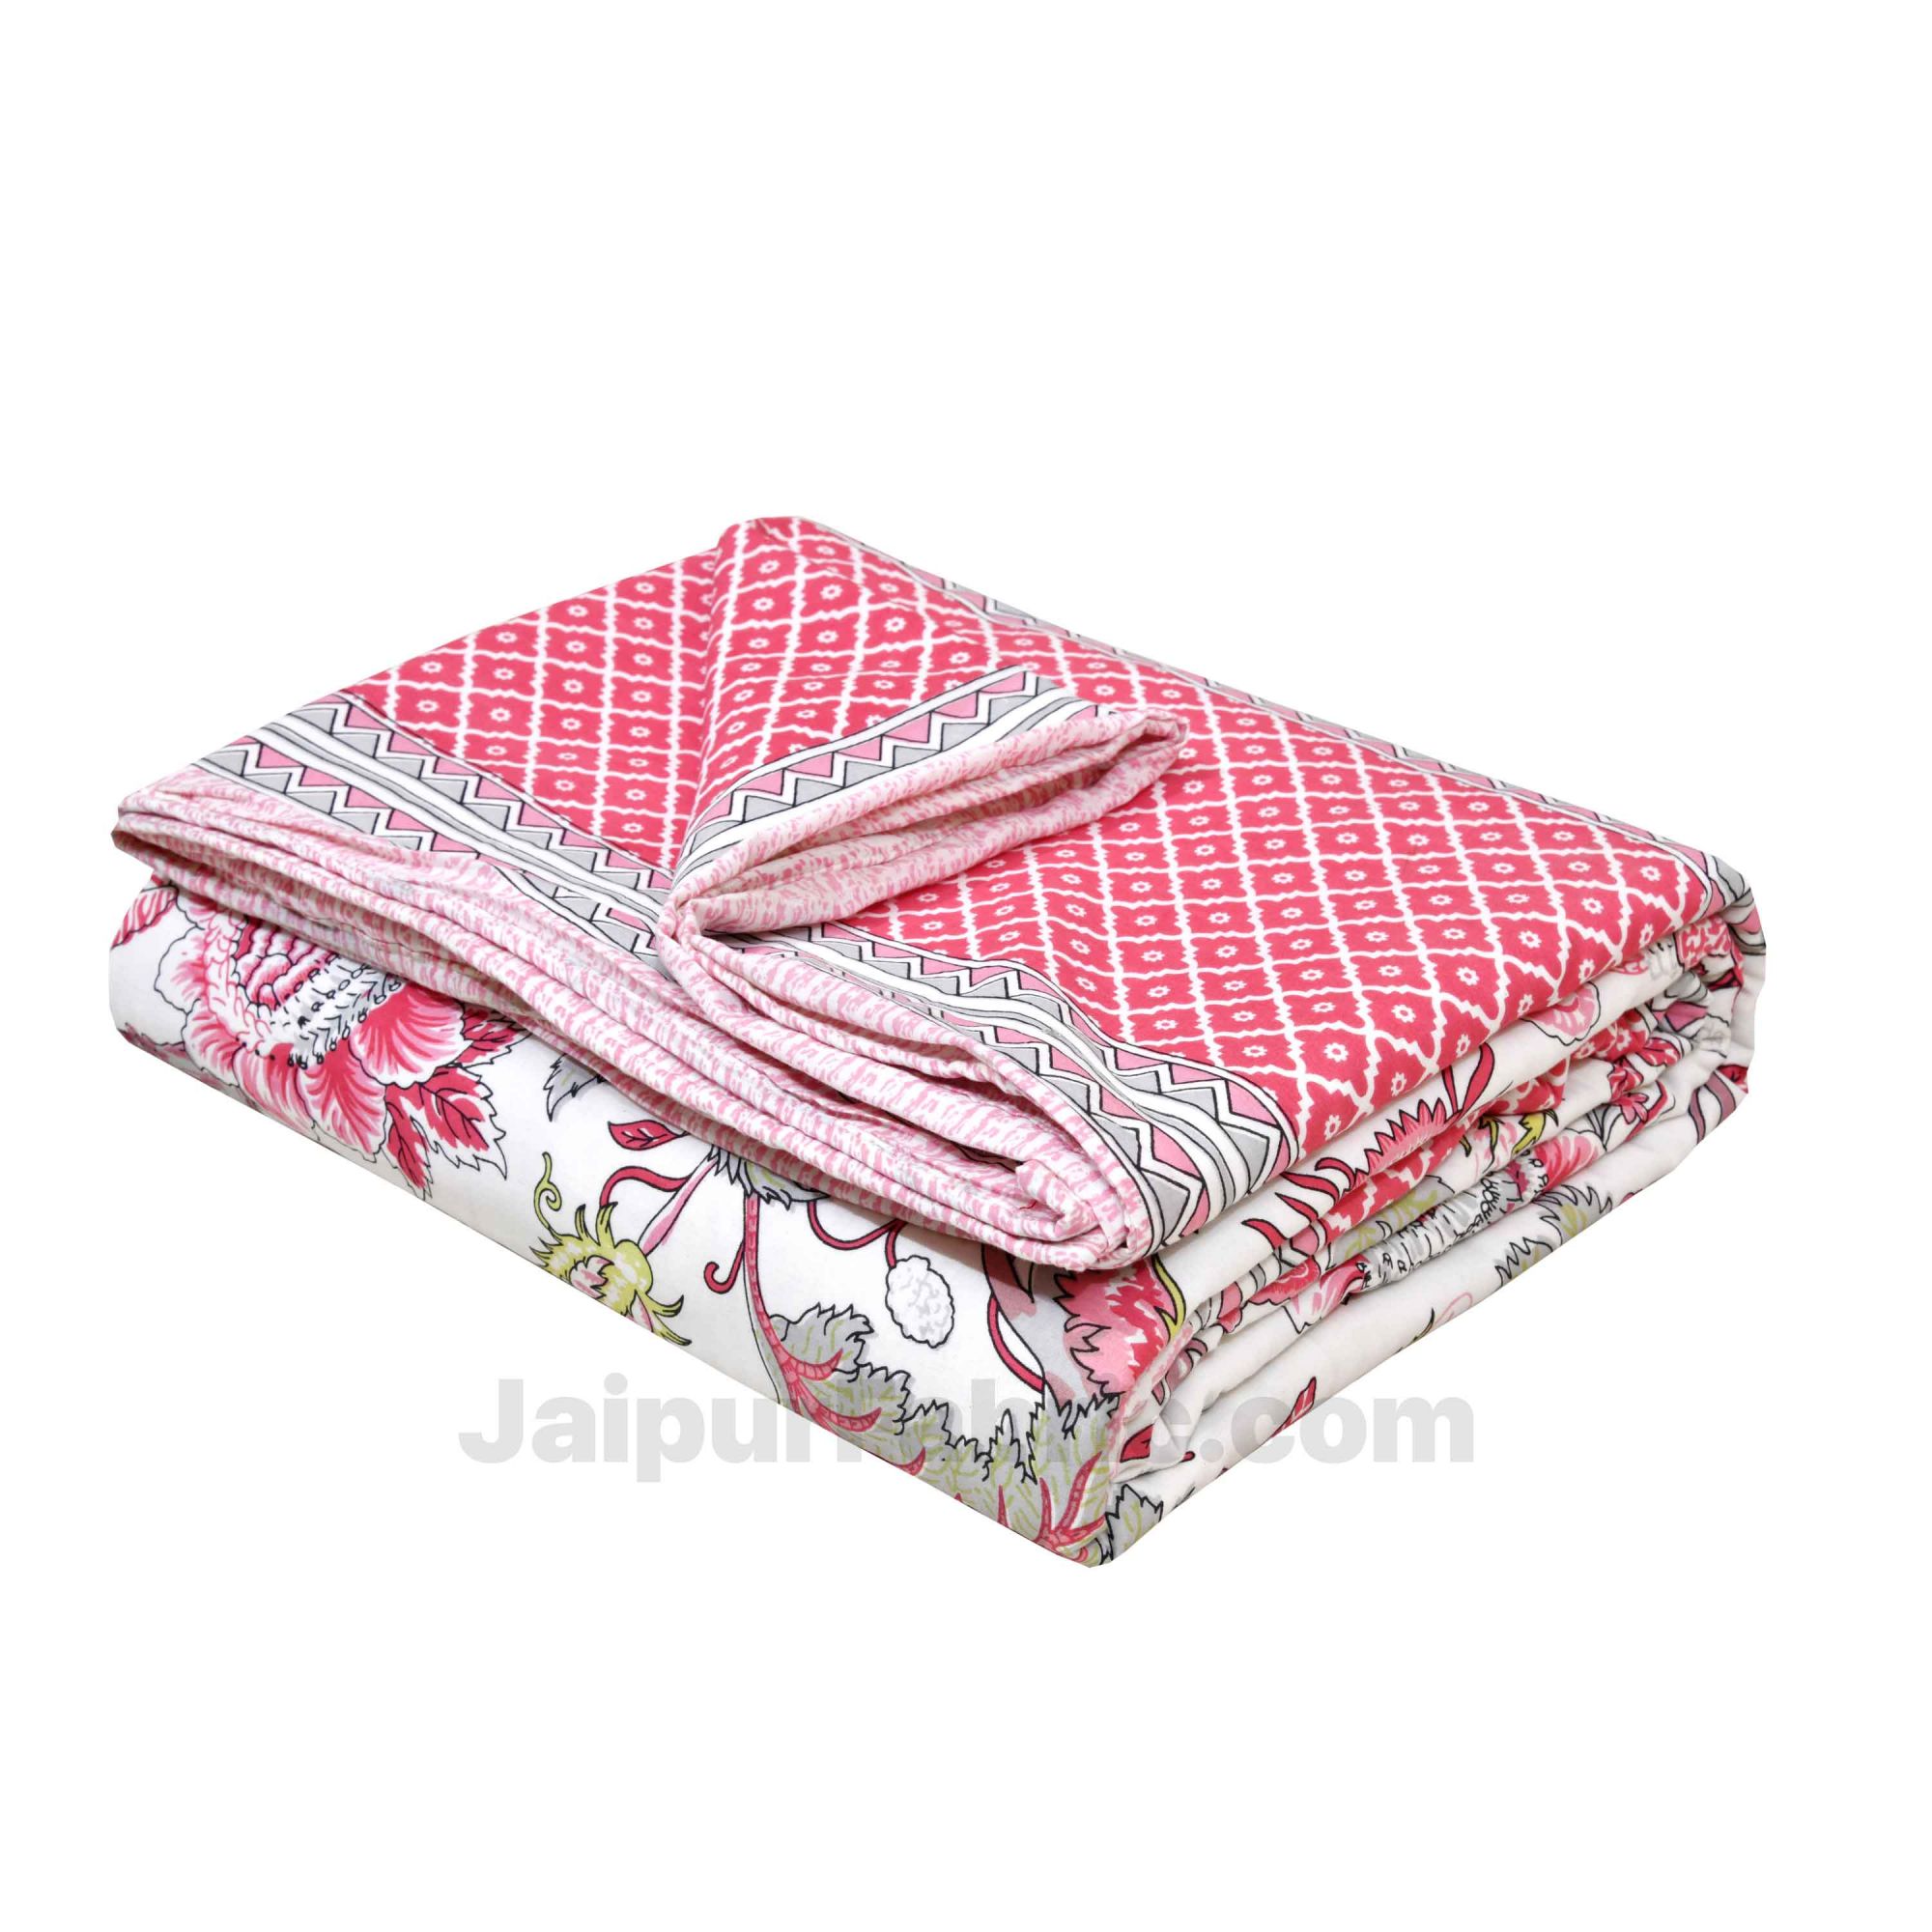 Lightweight Reversible Double Bed Dohar Pink Gala FlowersSkin Friendly Pure Cotton MulMul Blanket / AC Comforter / Summer Quilt